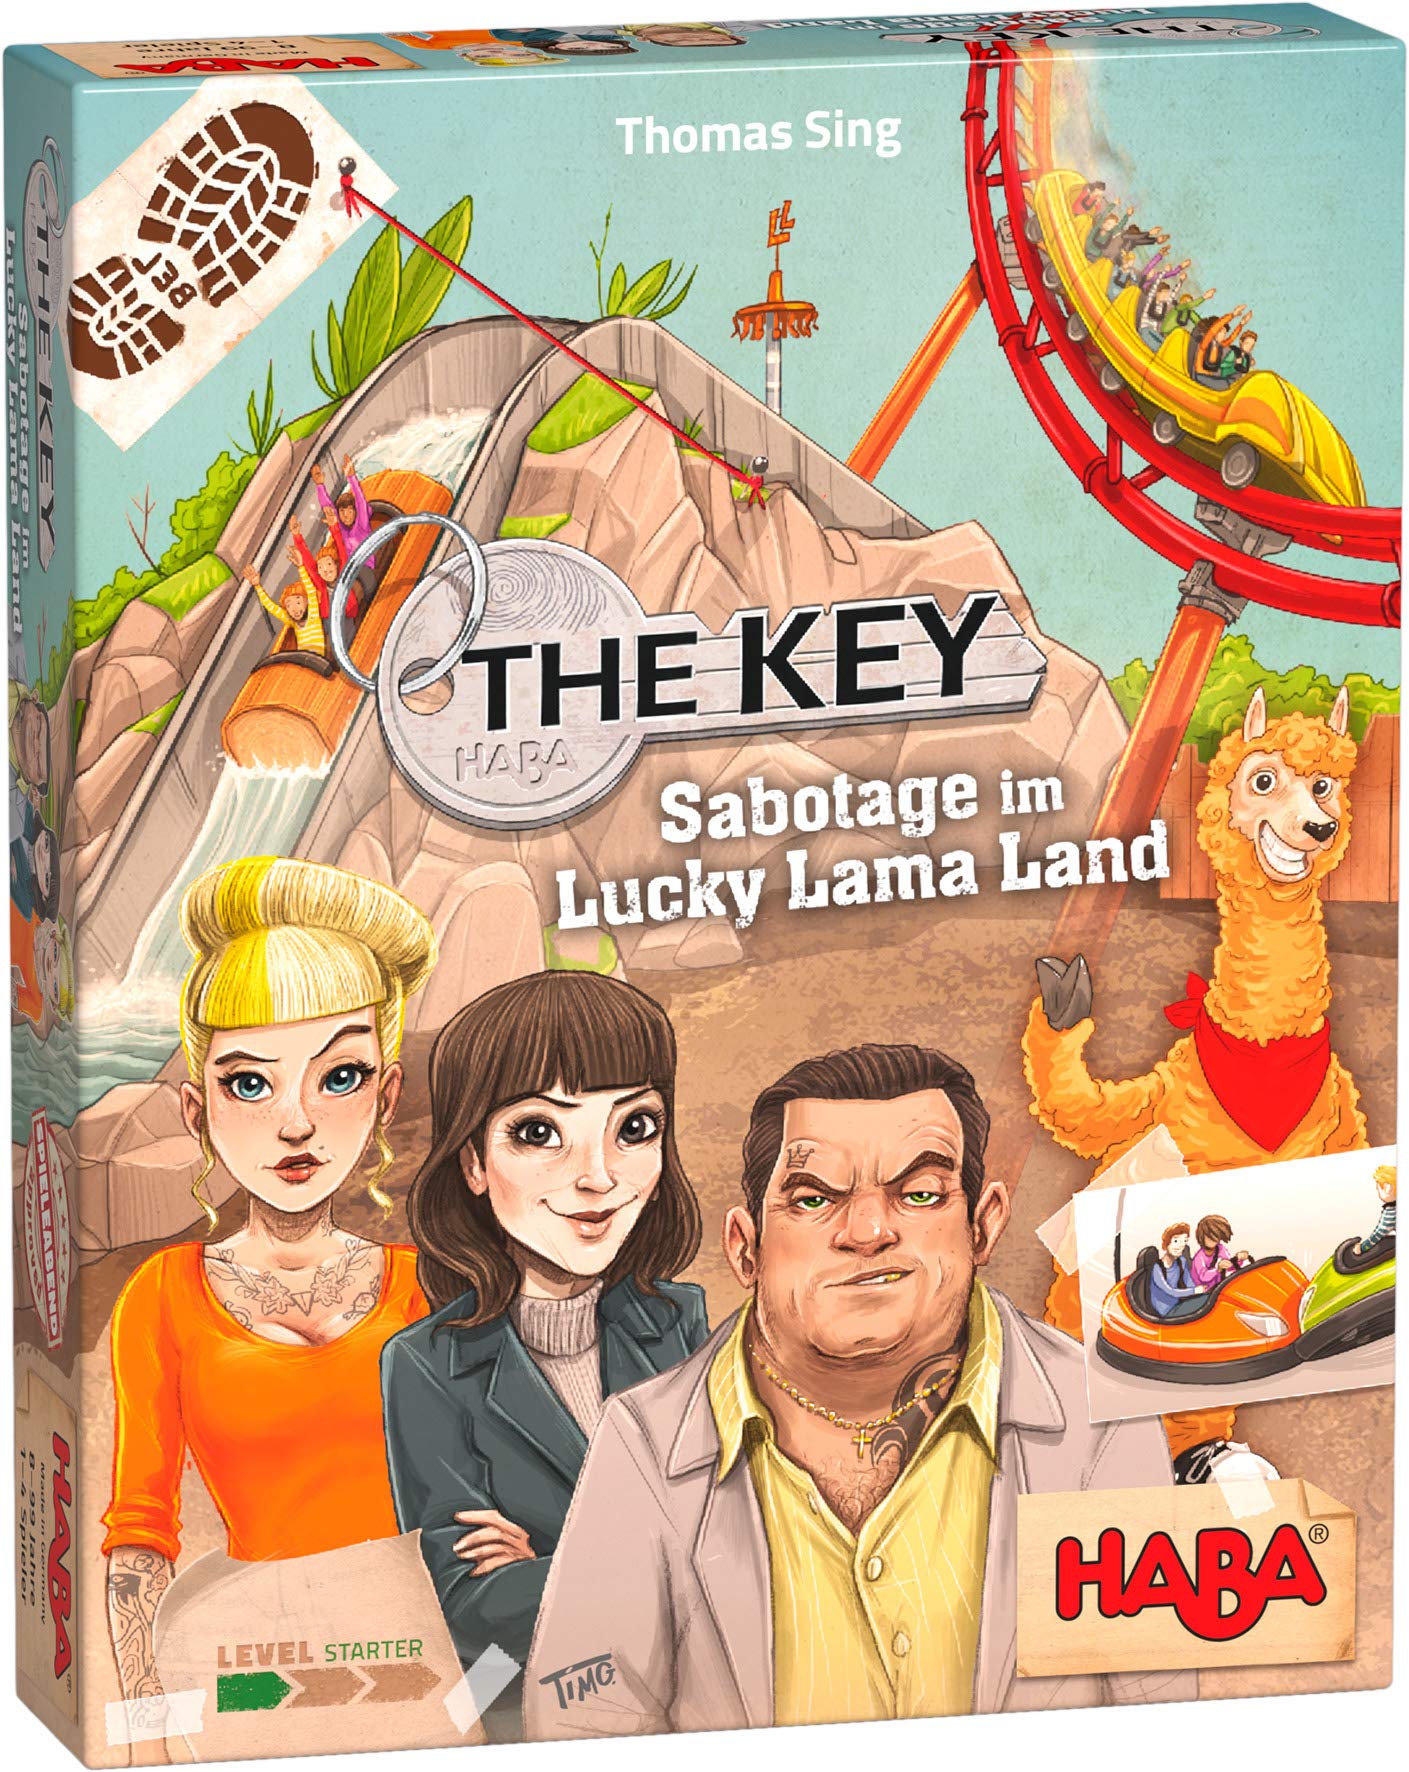 HABA 305855 - The Key – Sabotage im Lucky Lama Land, Spiel ab 8 Jahren, made in Germany, bunt